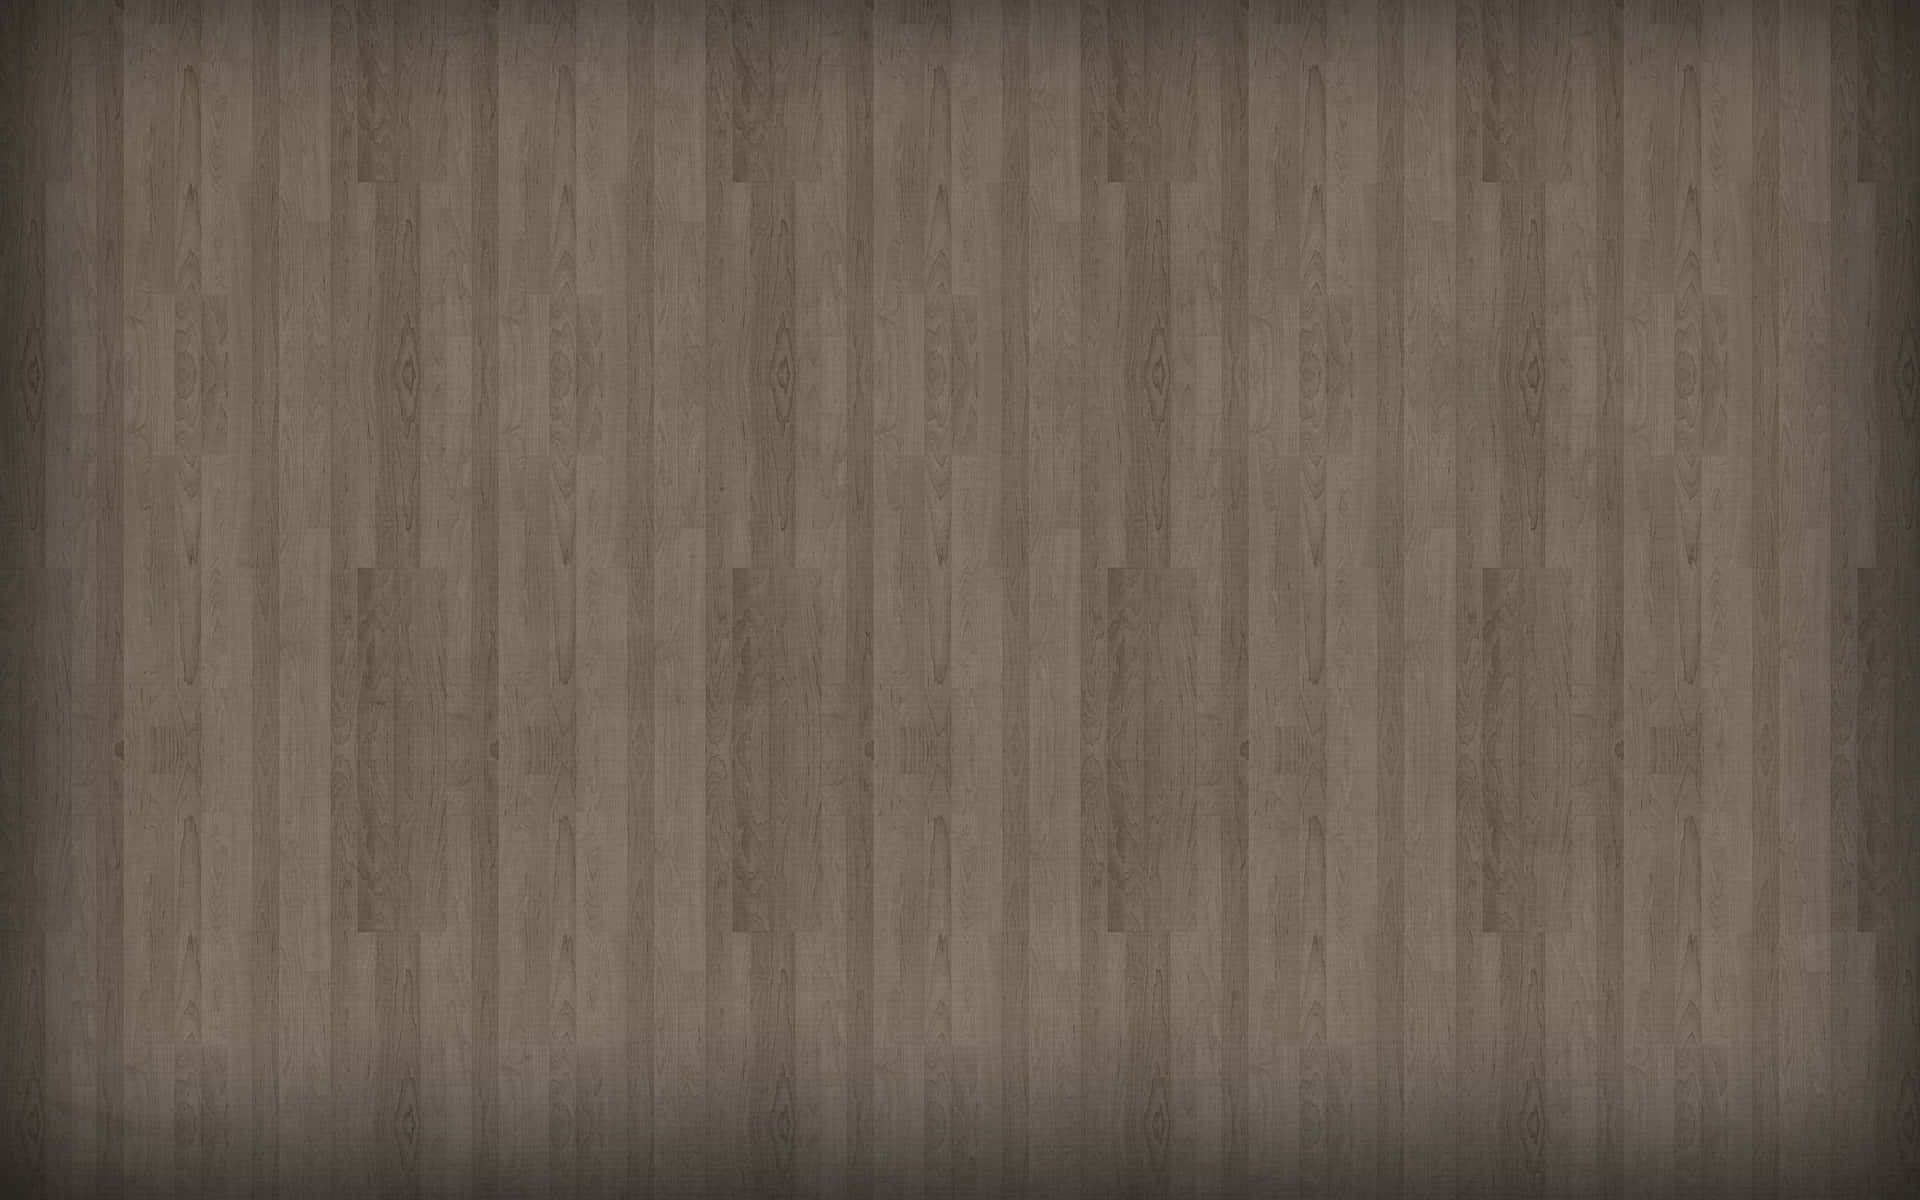 Wood Floor Background With Dark Brown Stripes